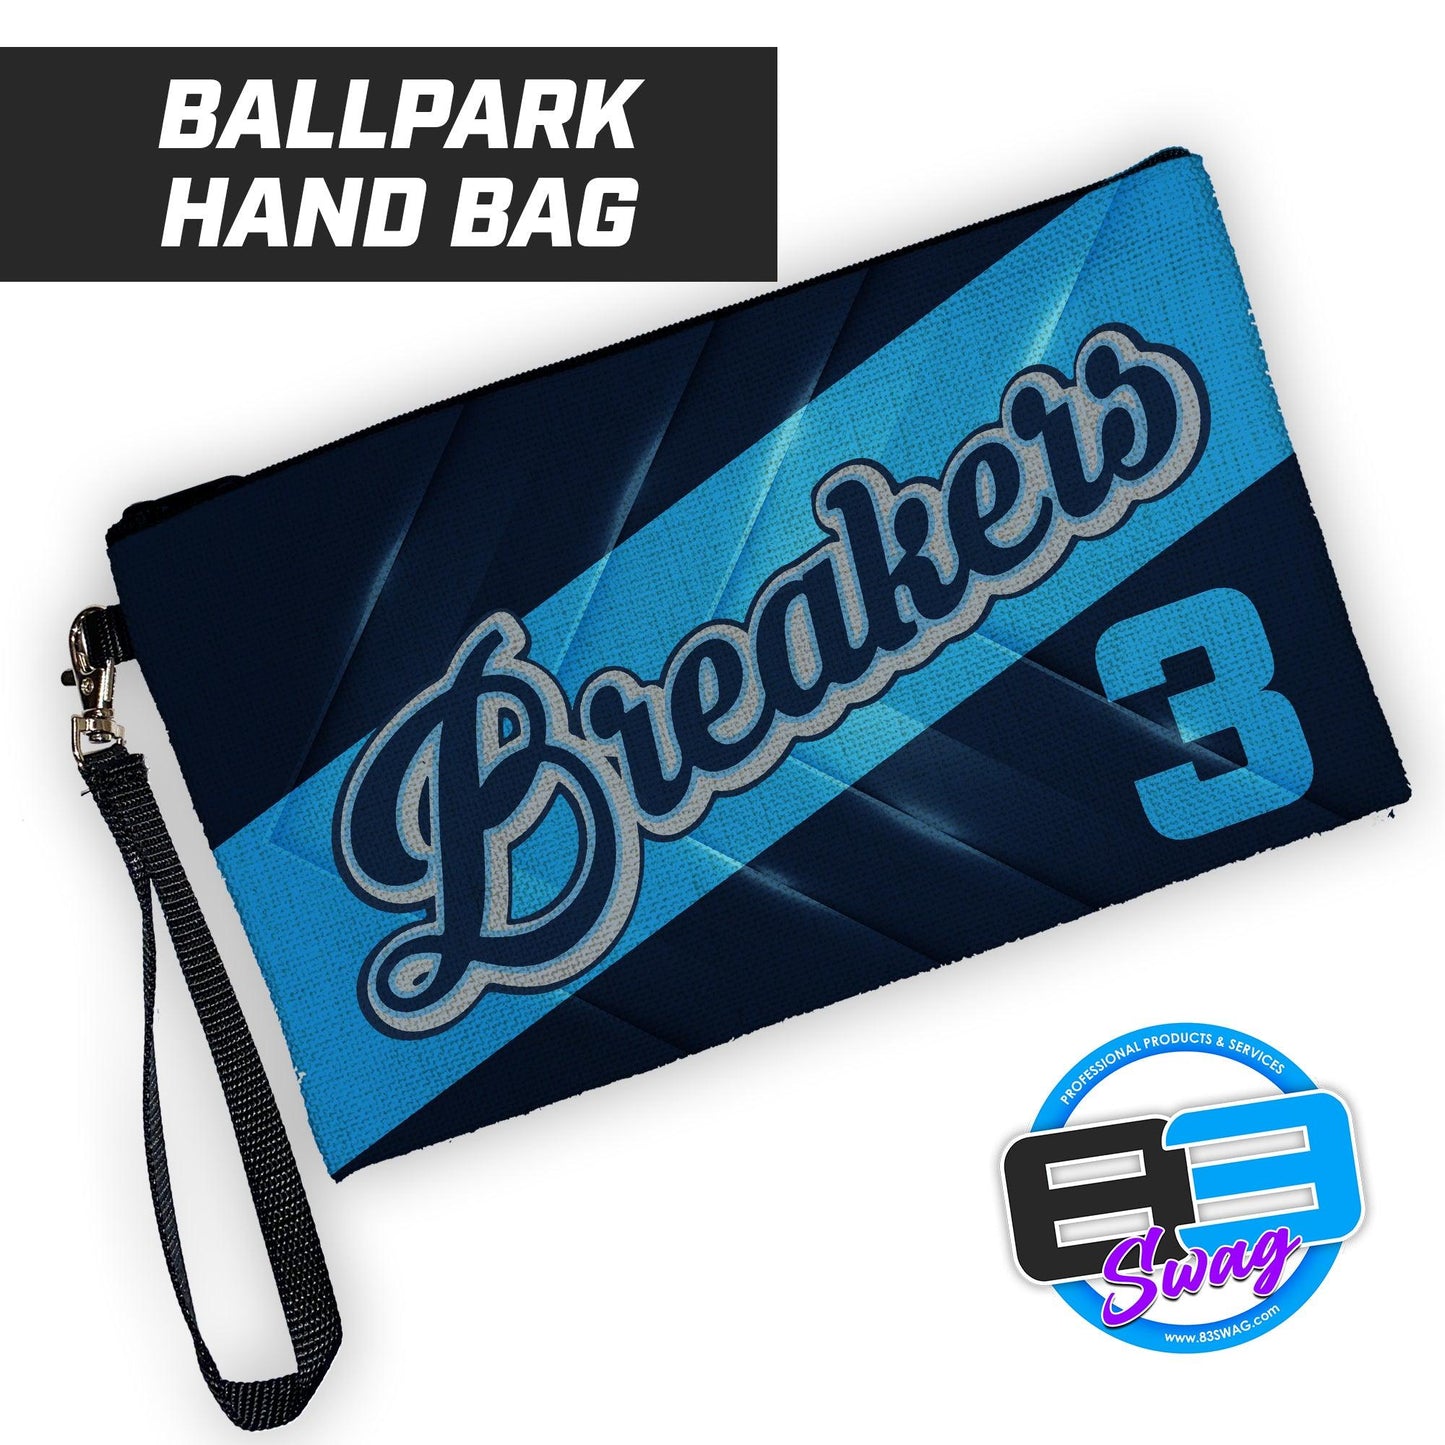 Breakers - 9"x5" Zipper Bag with Wrist Strap